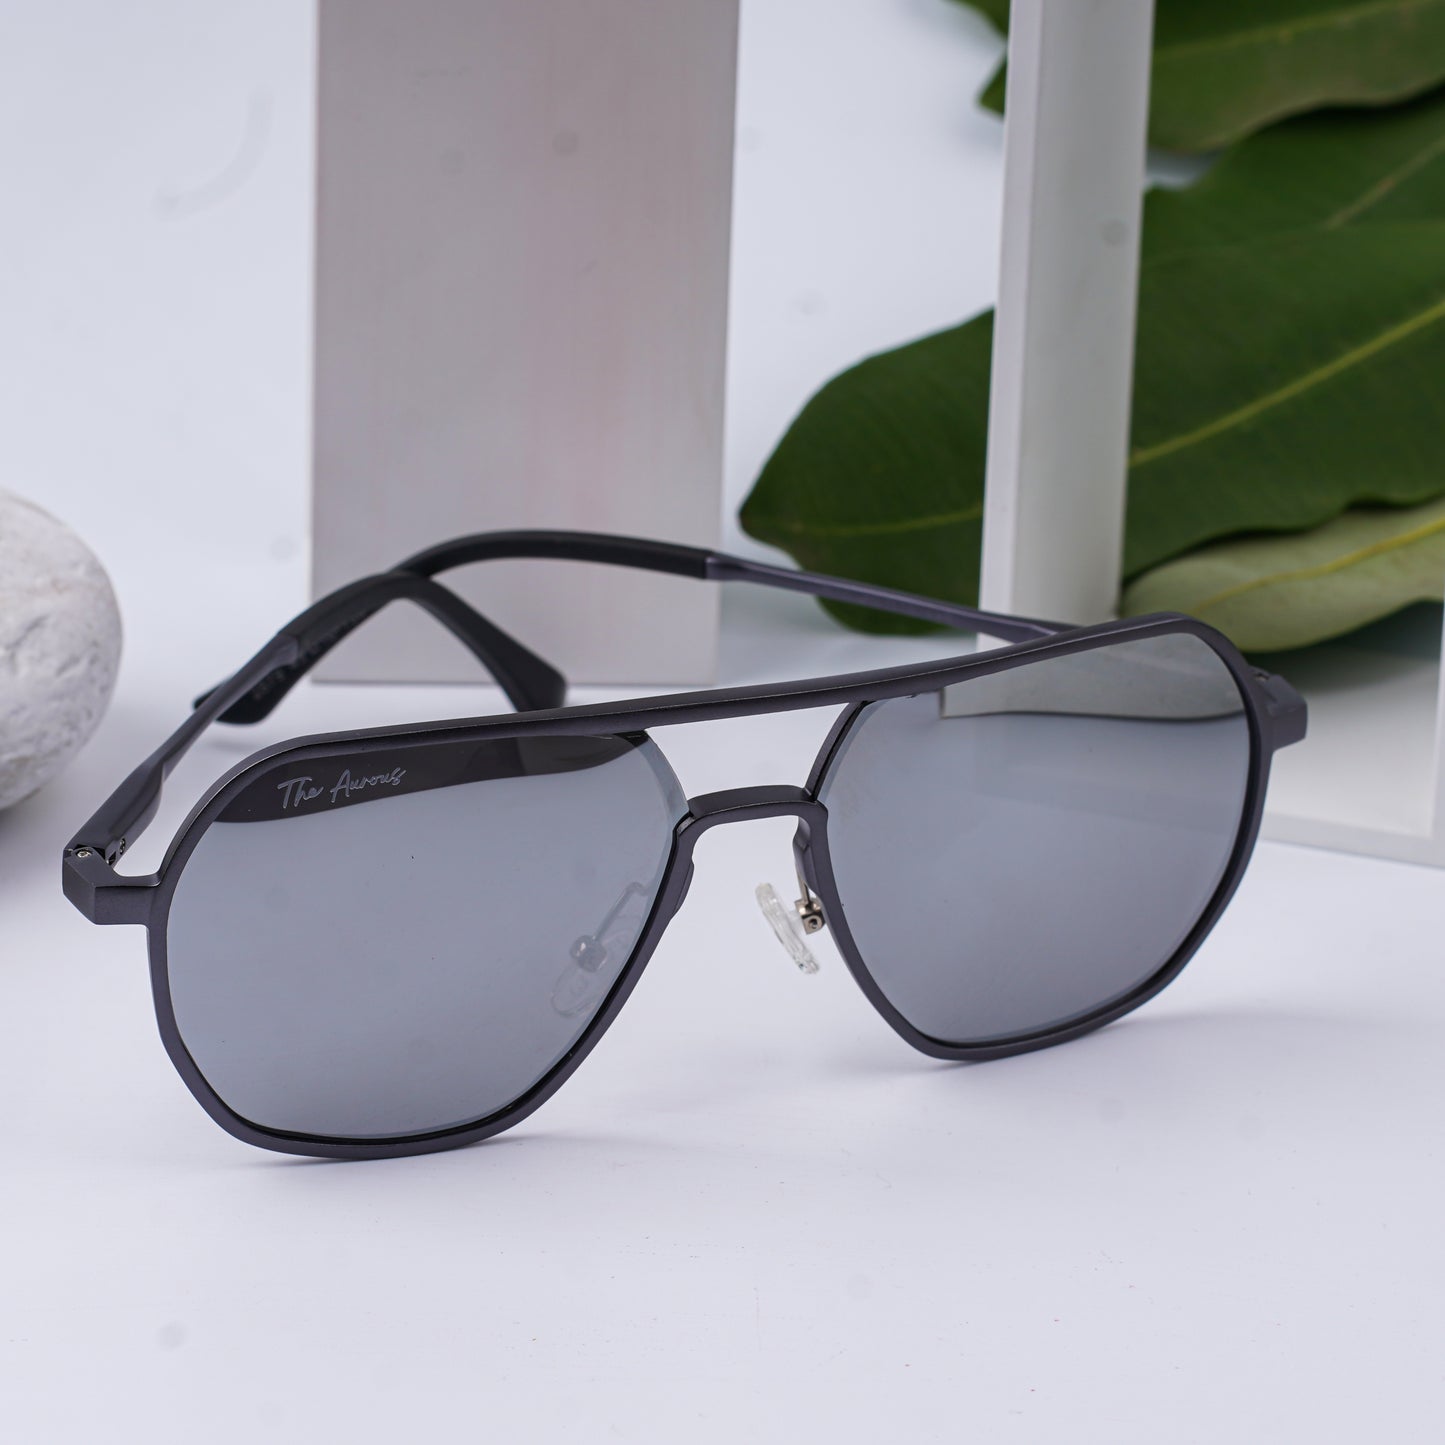 The Aurous Al-Mg Premium Polarized Sunglasses